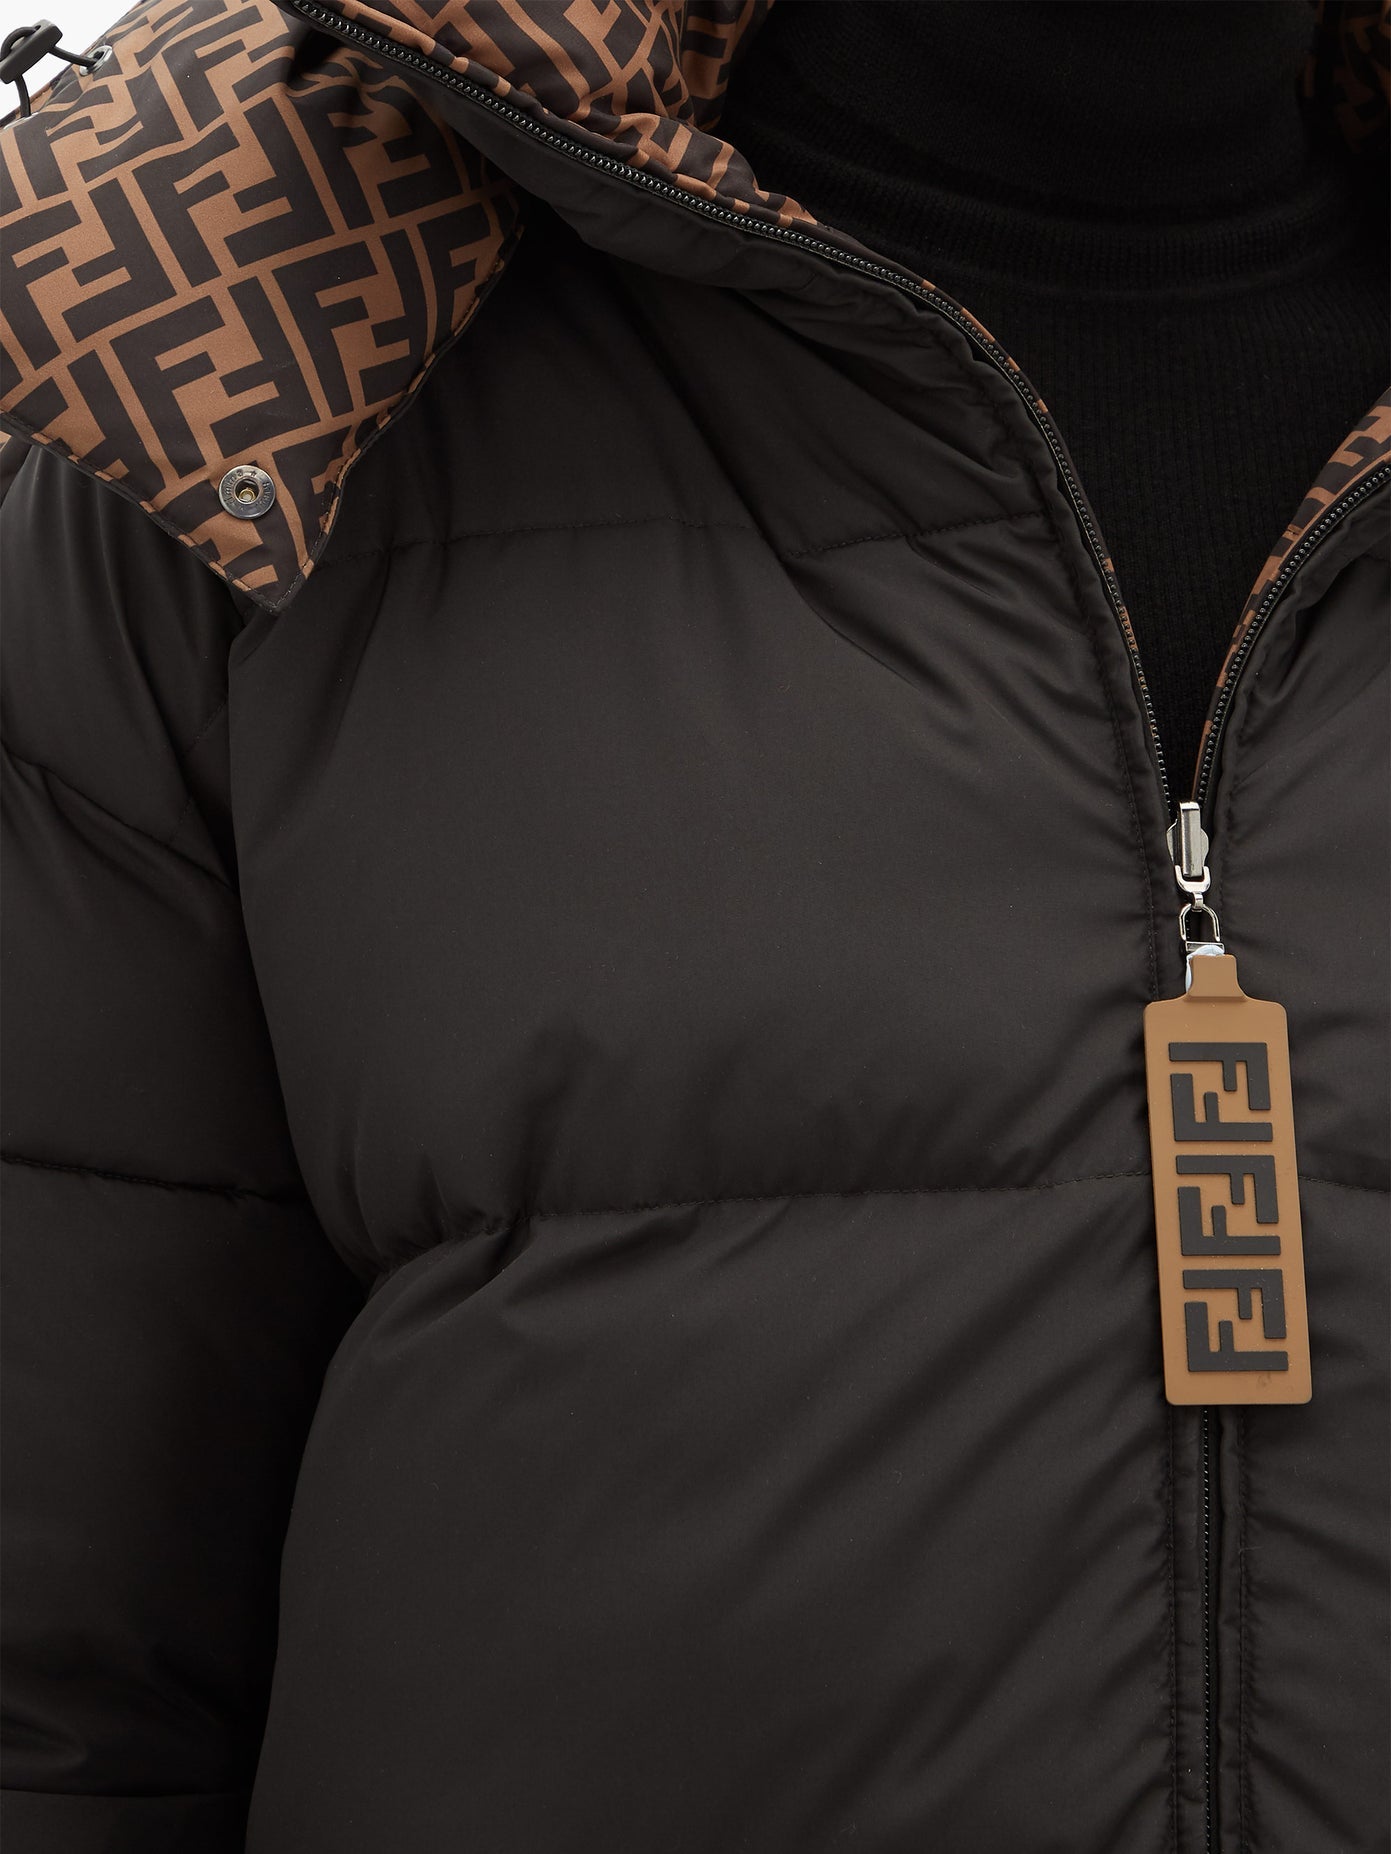 FENDI logo reversible puffer jacket size S RRP £2090